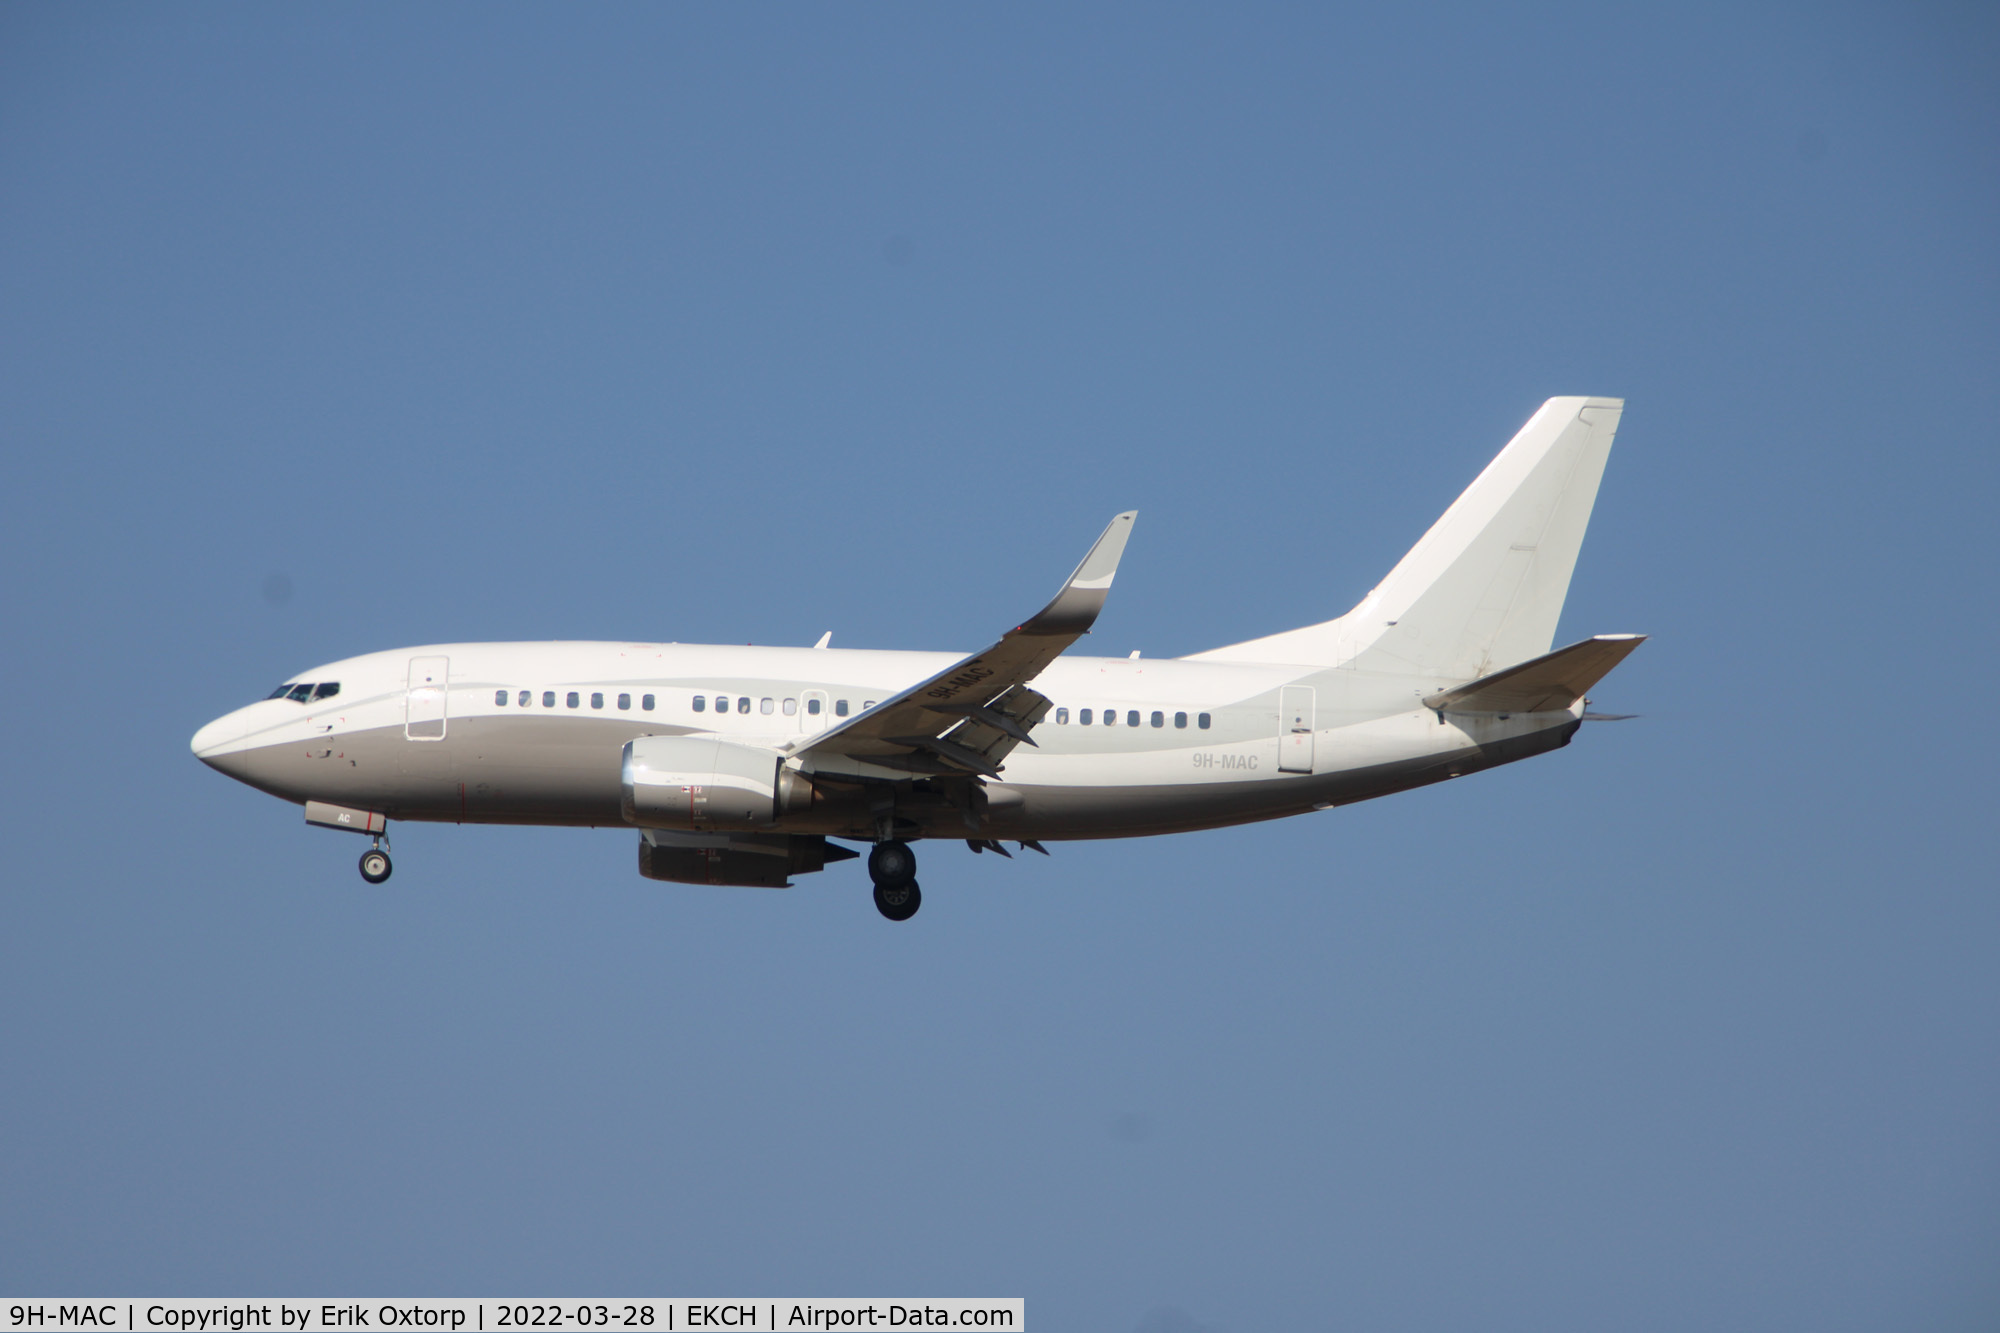 9H-MAC, 1990 Boeing 737-548 C/N 24968, 9H-MAC landing rw 22L